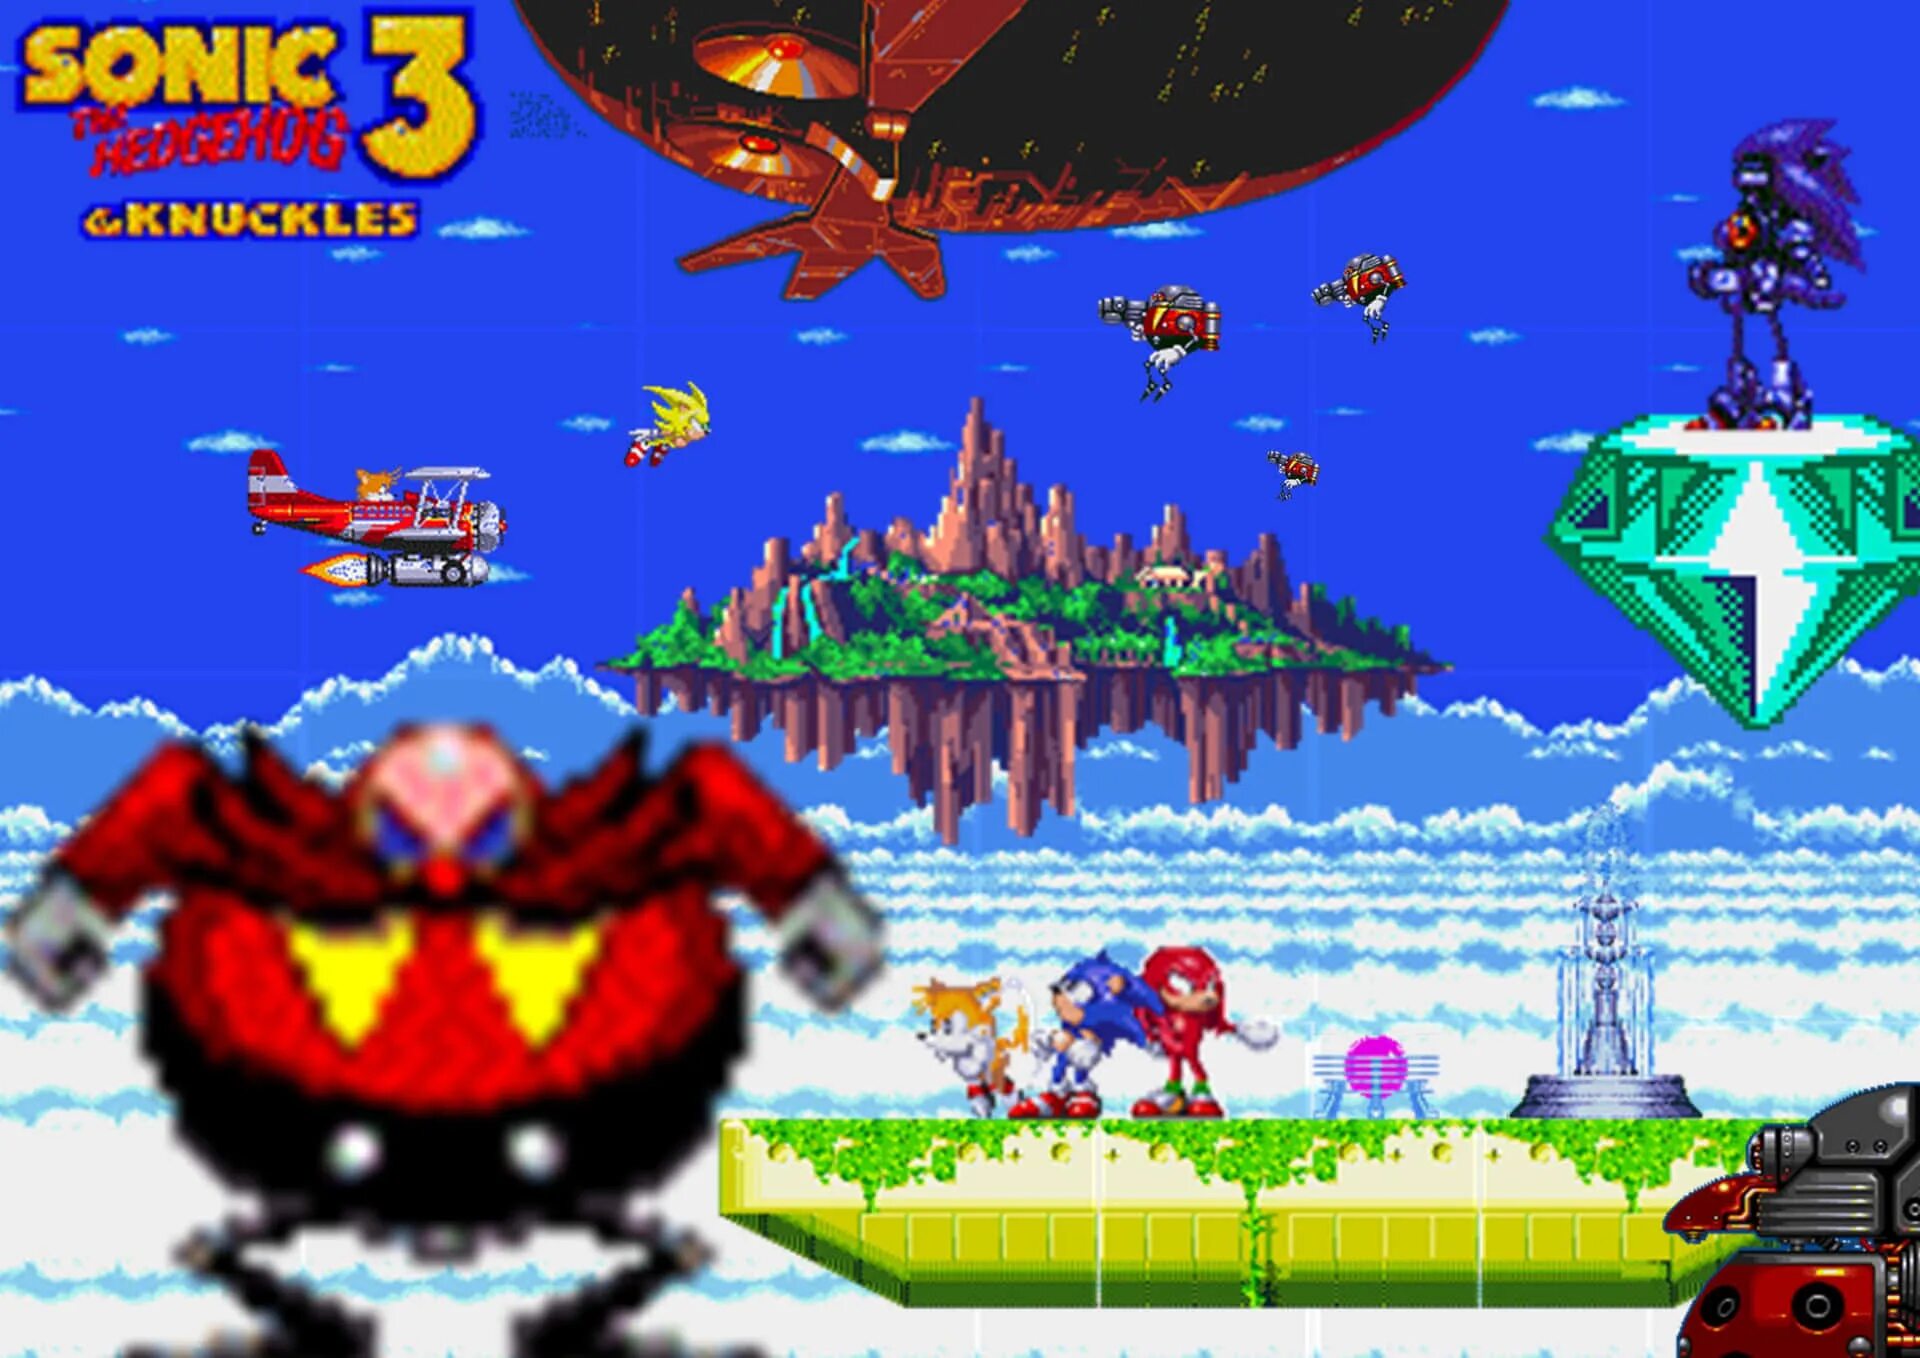 Sonic and knuckles download. Sonic 3 и НАКЛЗ. Sonic 3 Sega. Соник 3 игра сега. Игра Sega Sonic и НАКЛЗ.